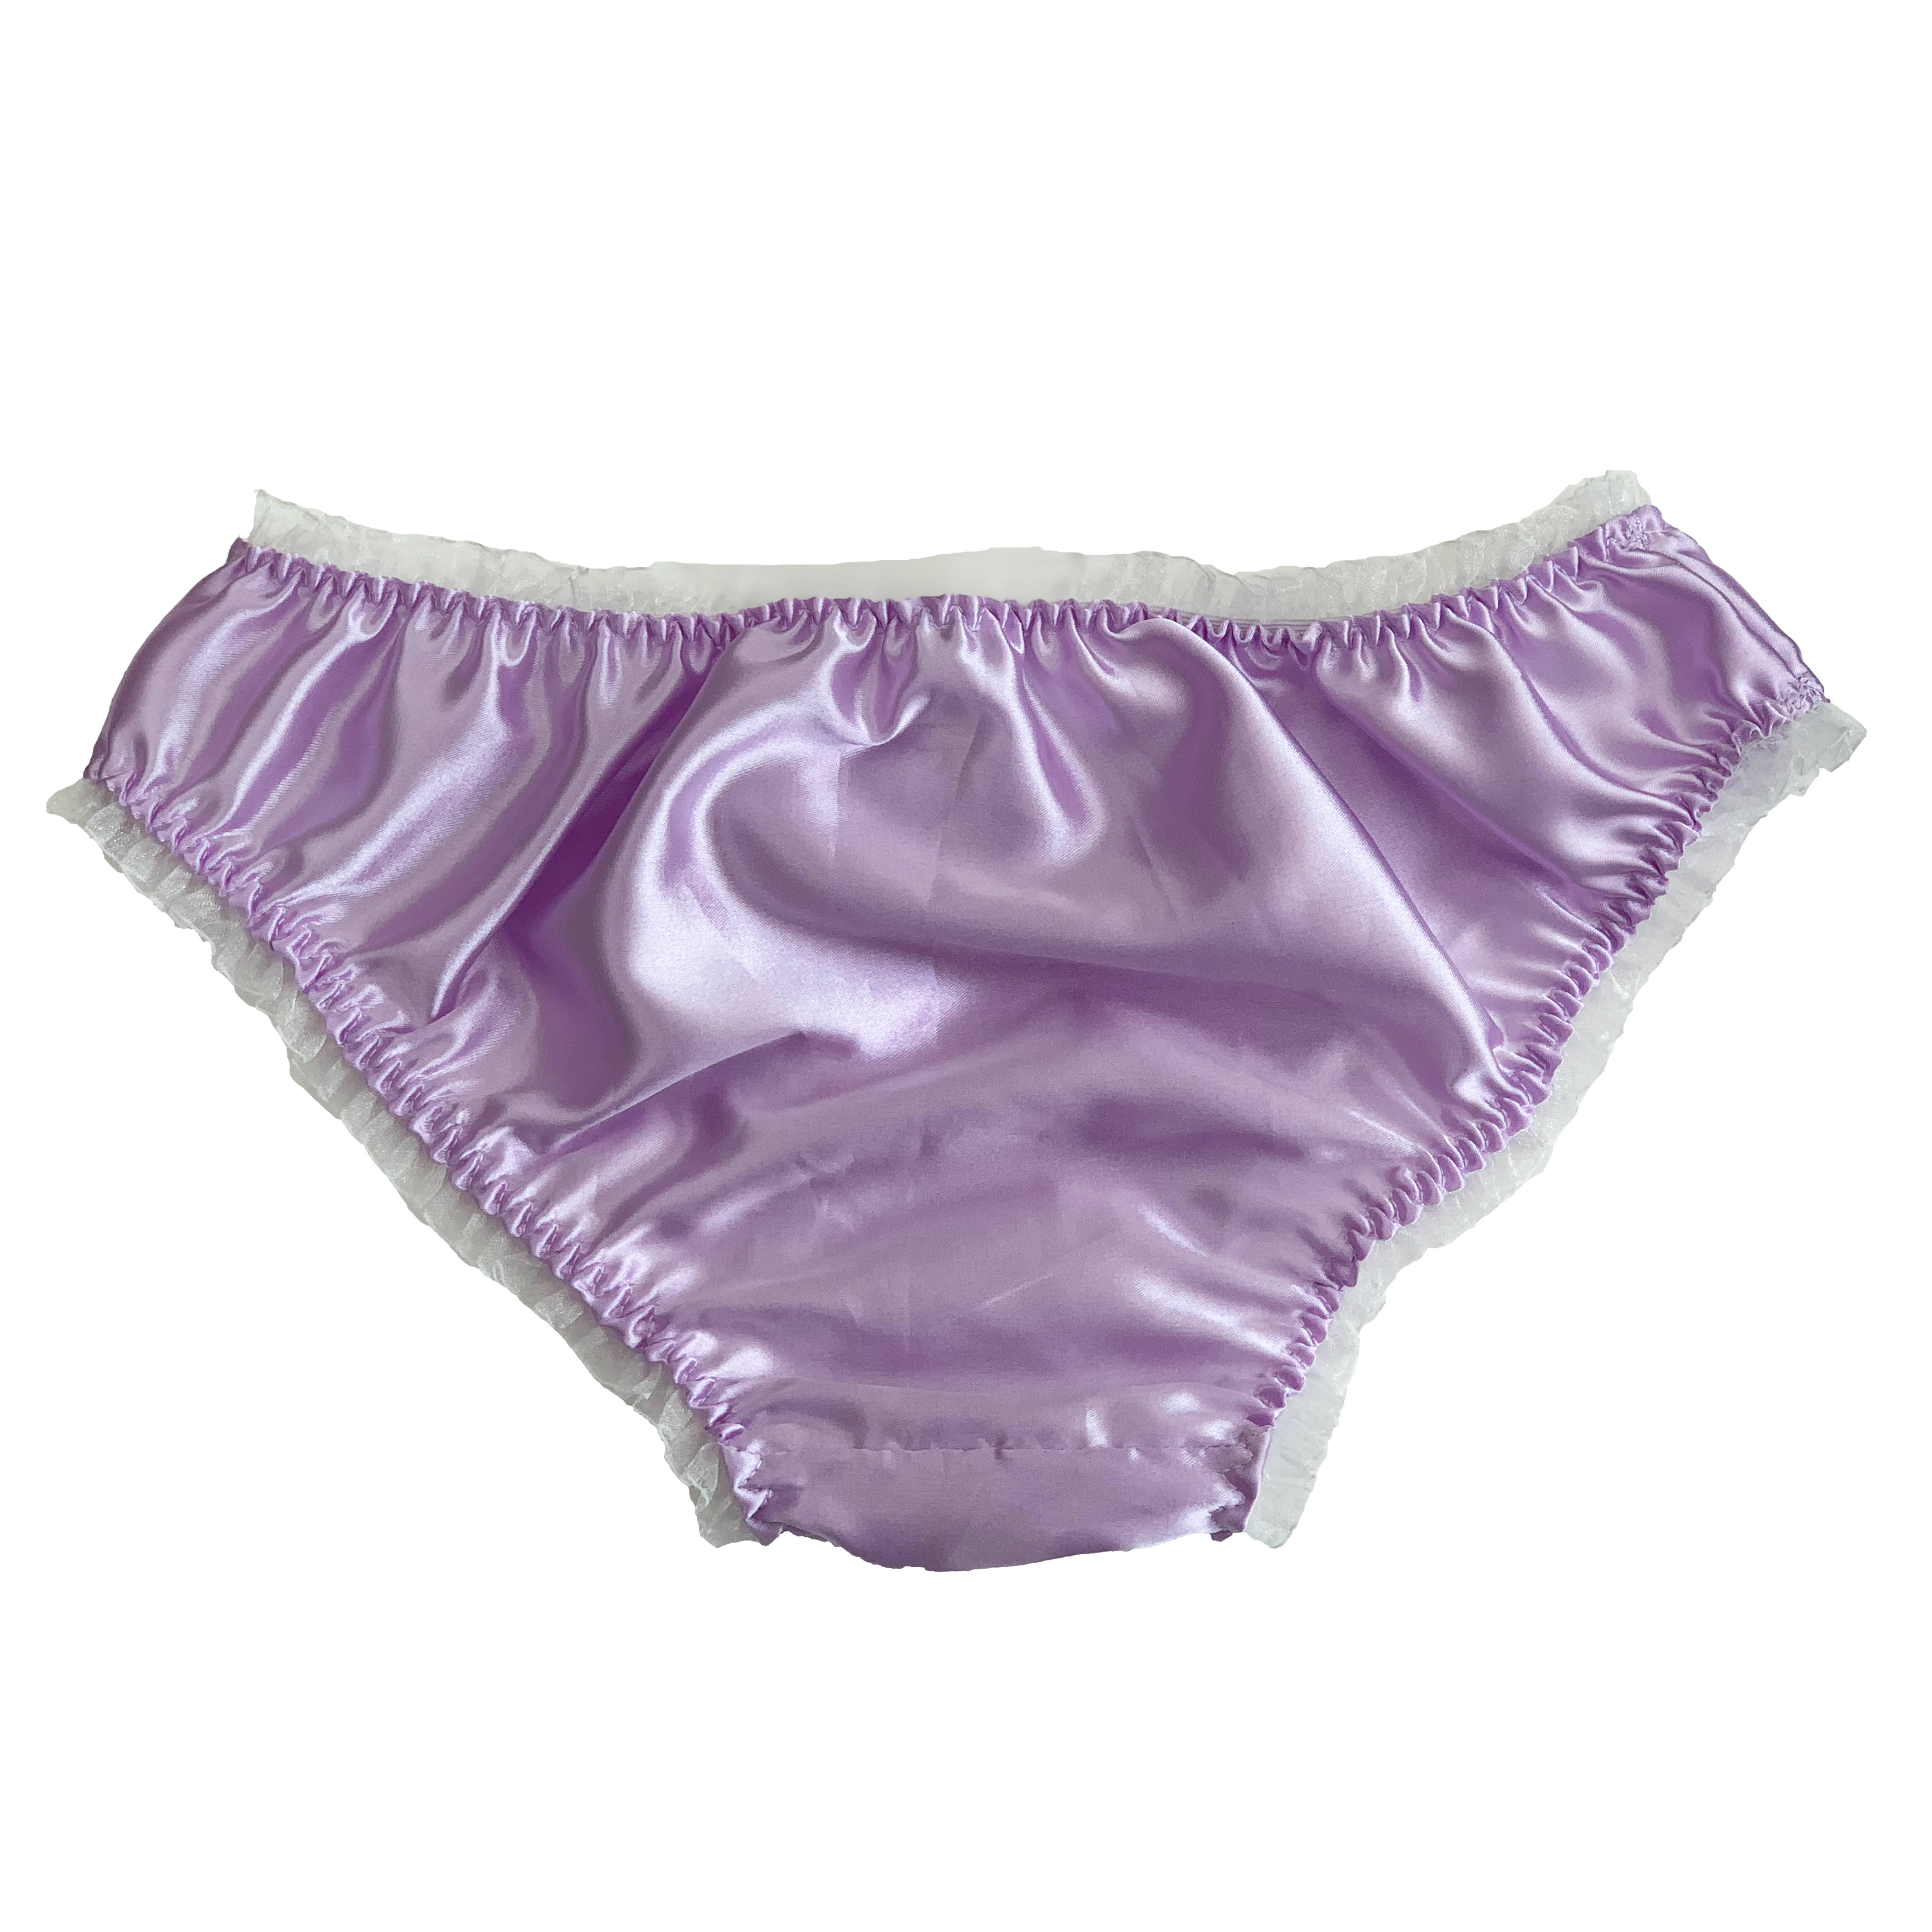 Liliac Satin Sissy Frilly Panties Bikini Knicker Underwear Briefs Size 10 20 1480 Picclick 